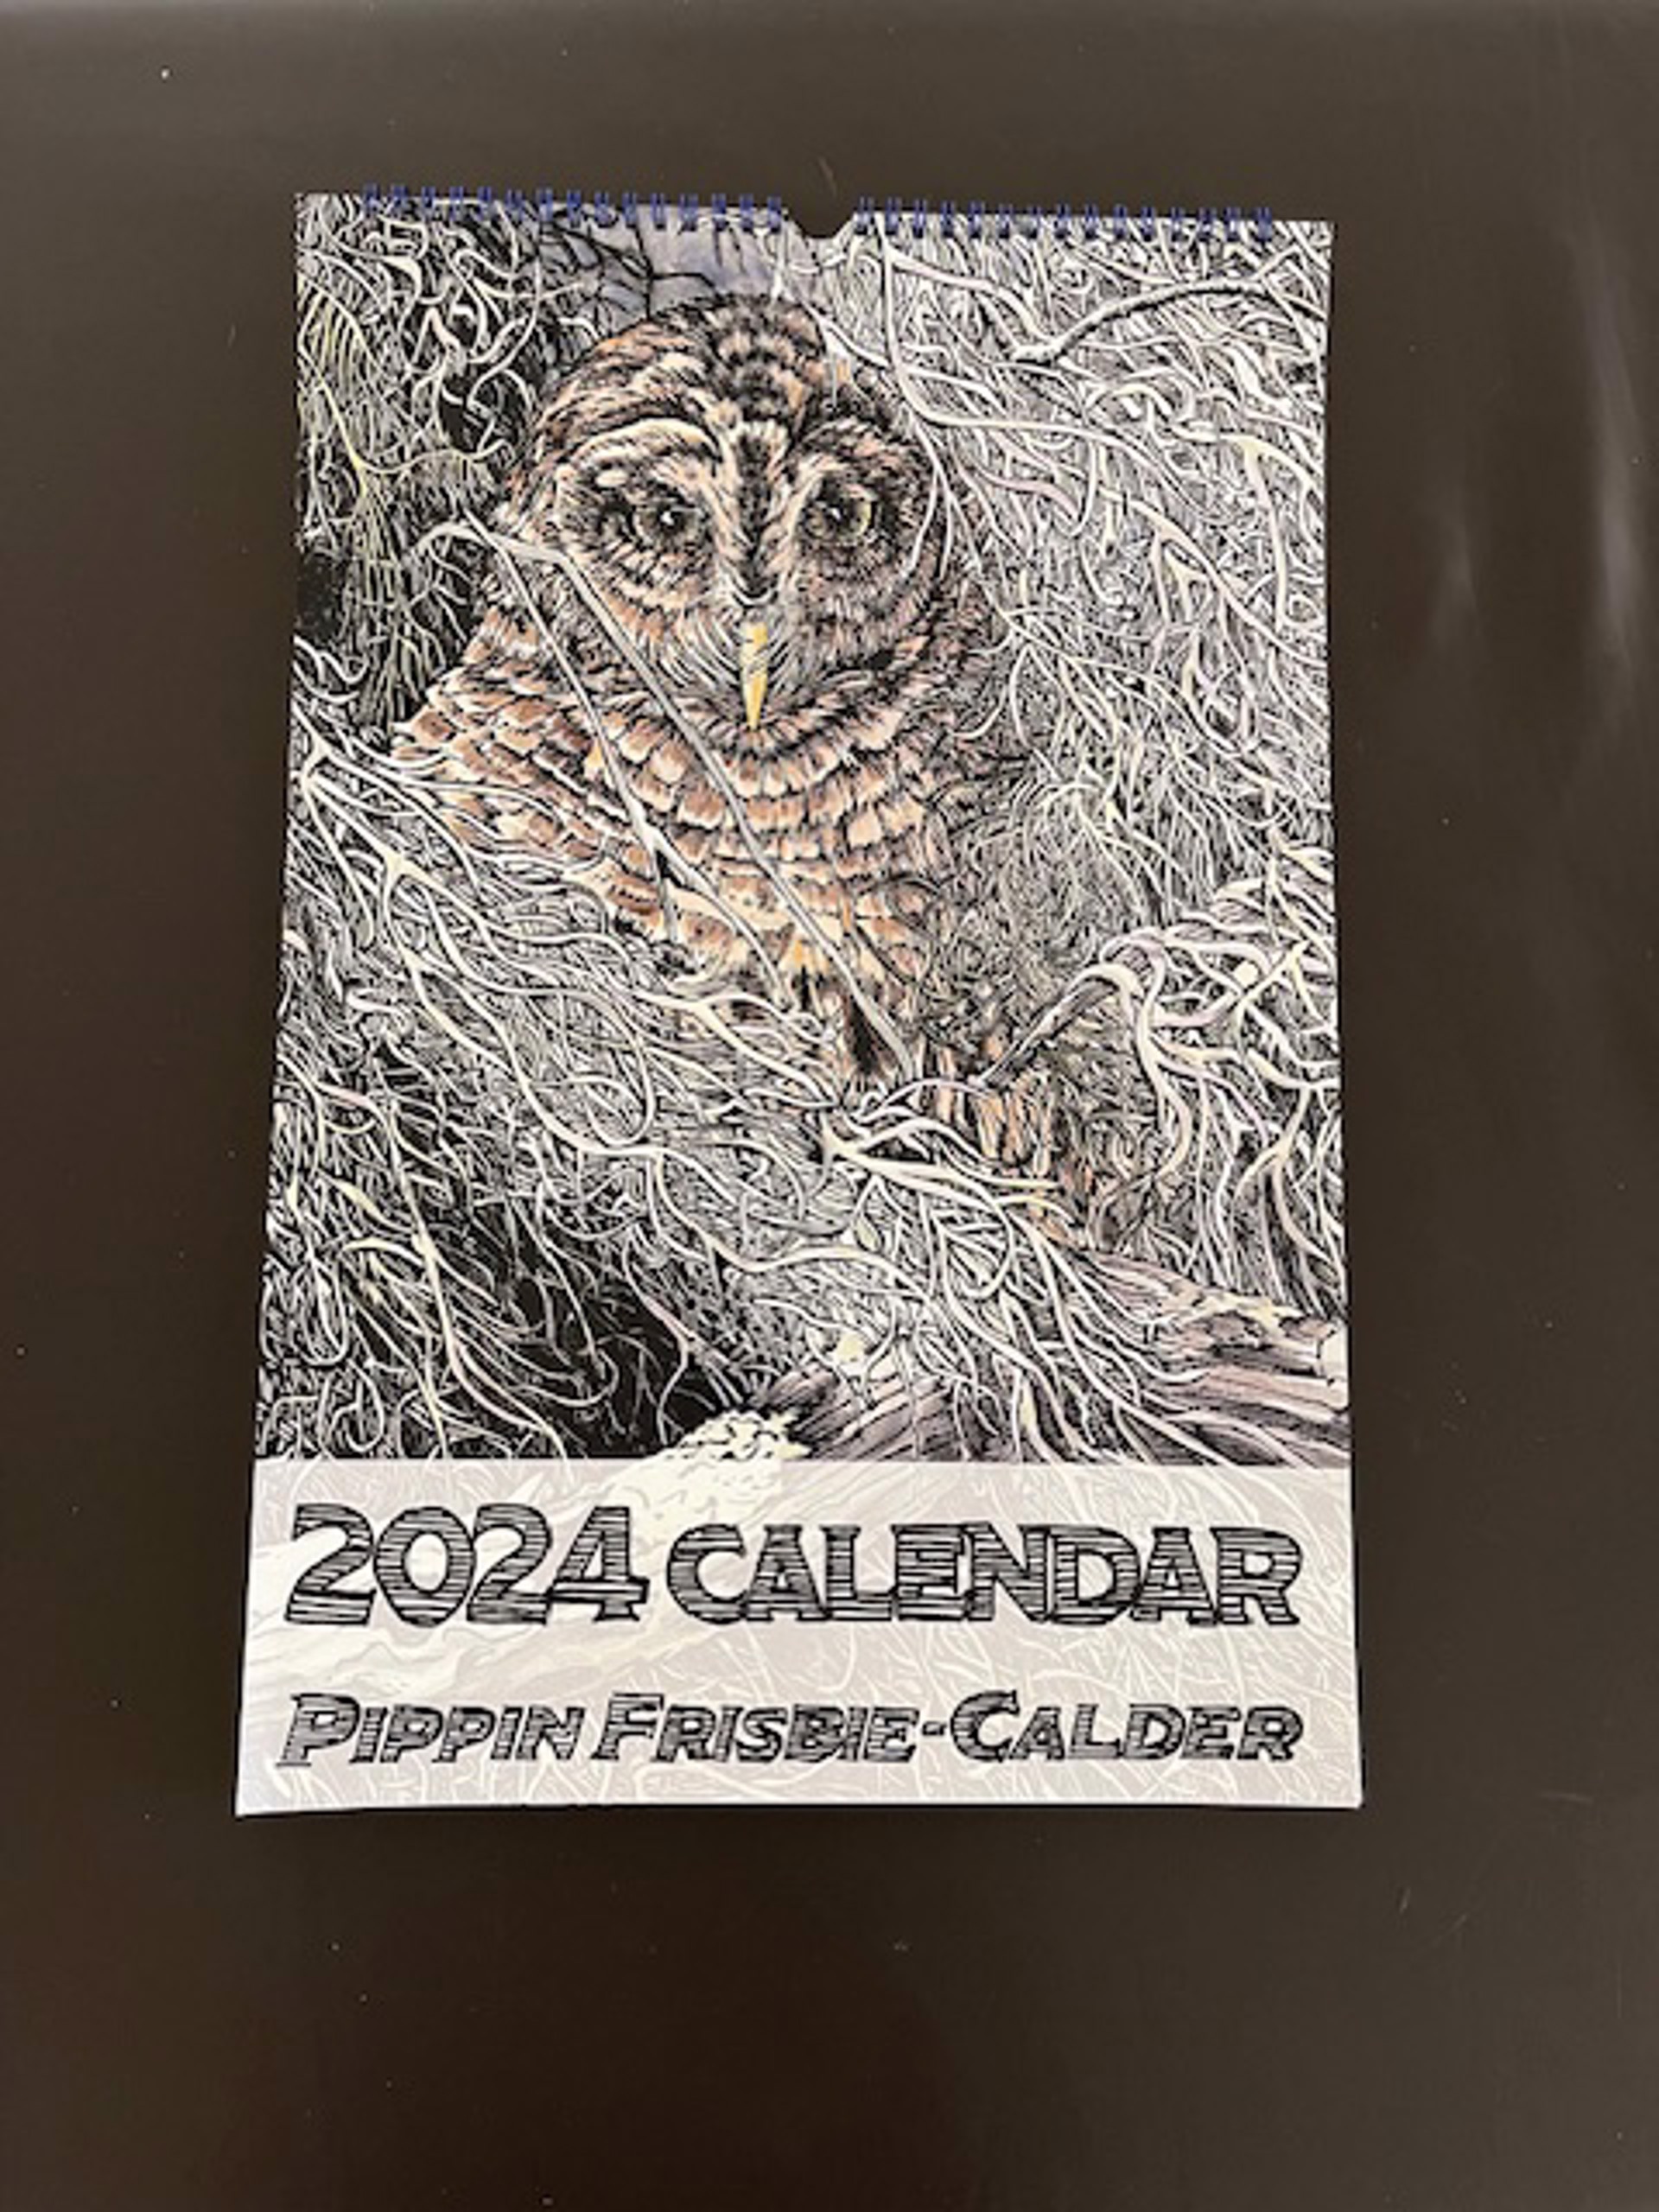 2024 Calendar by Pippin Frisbie-Calder